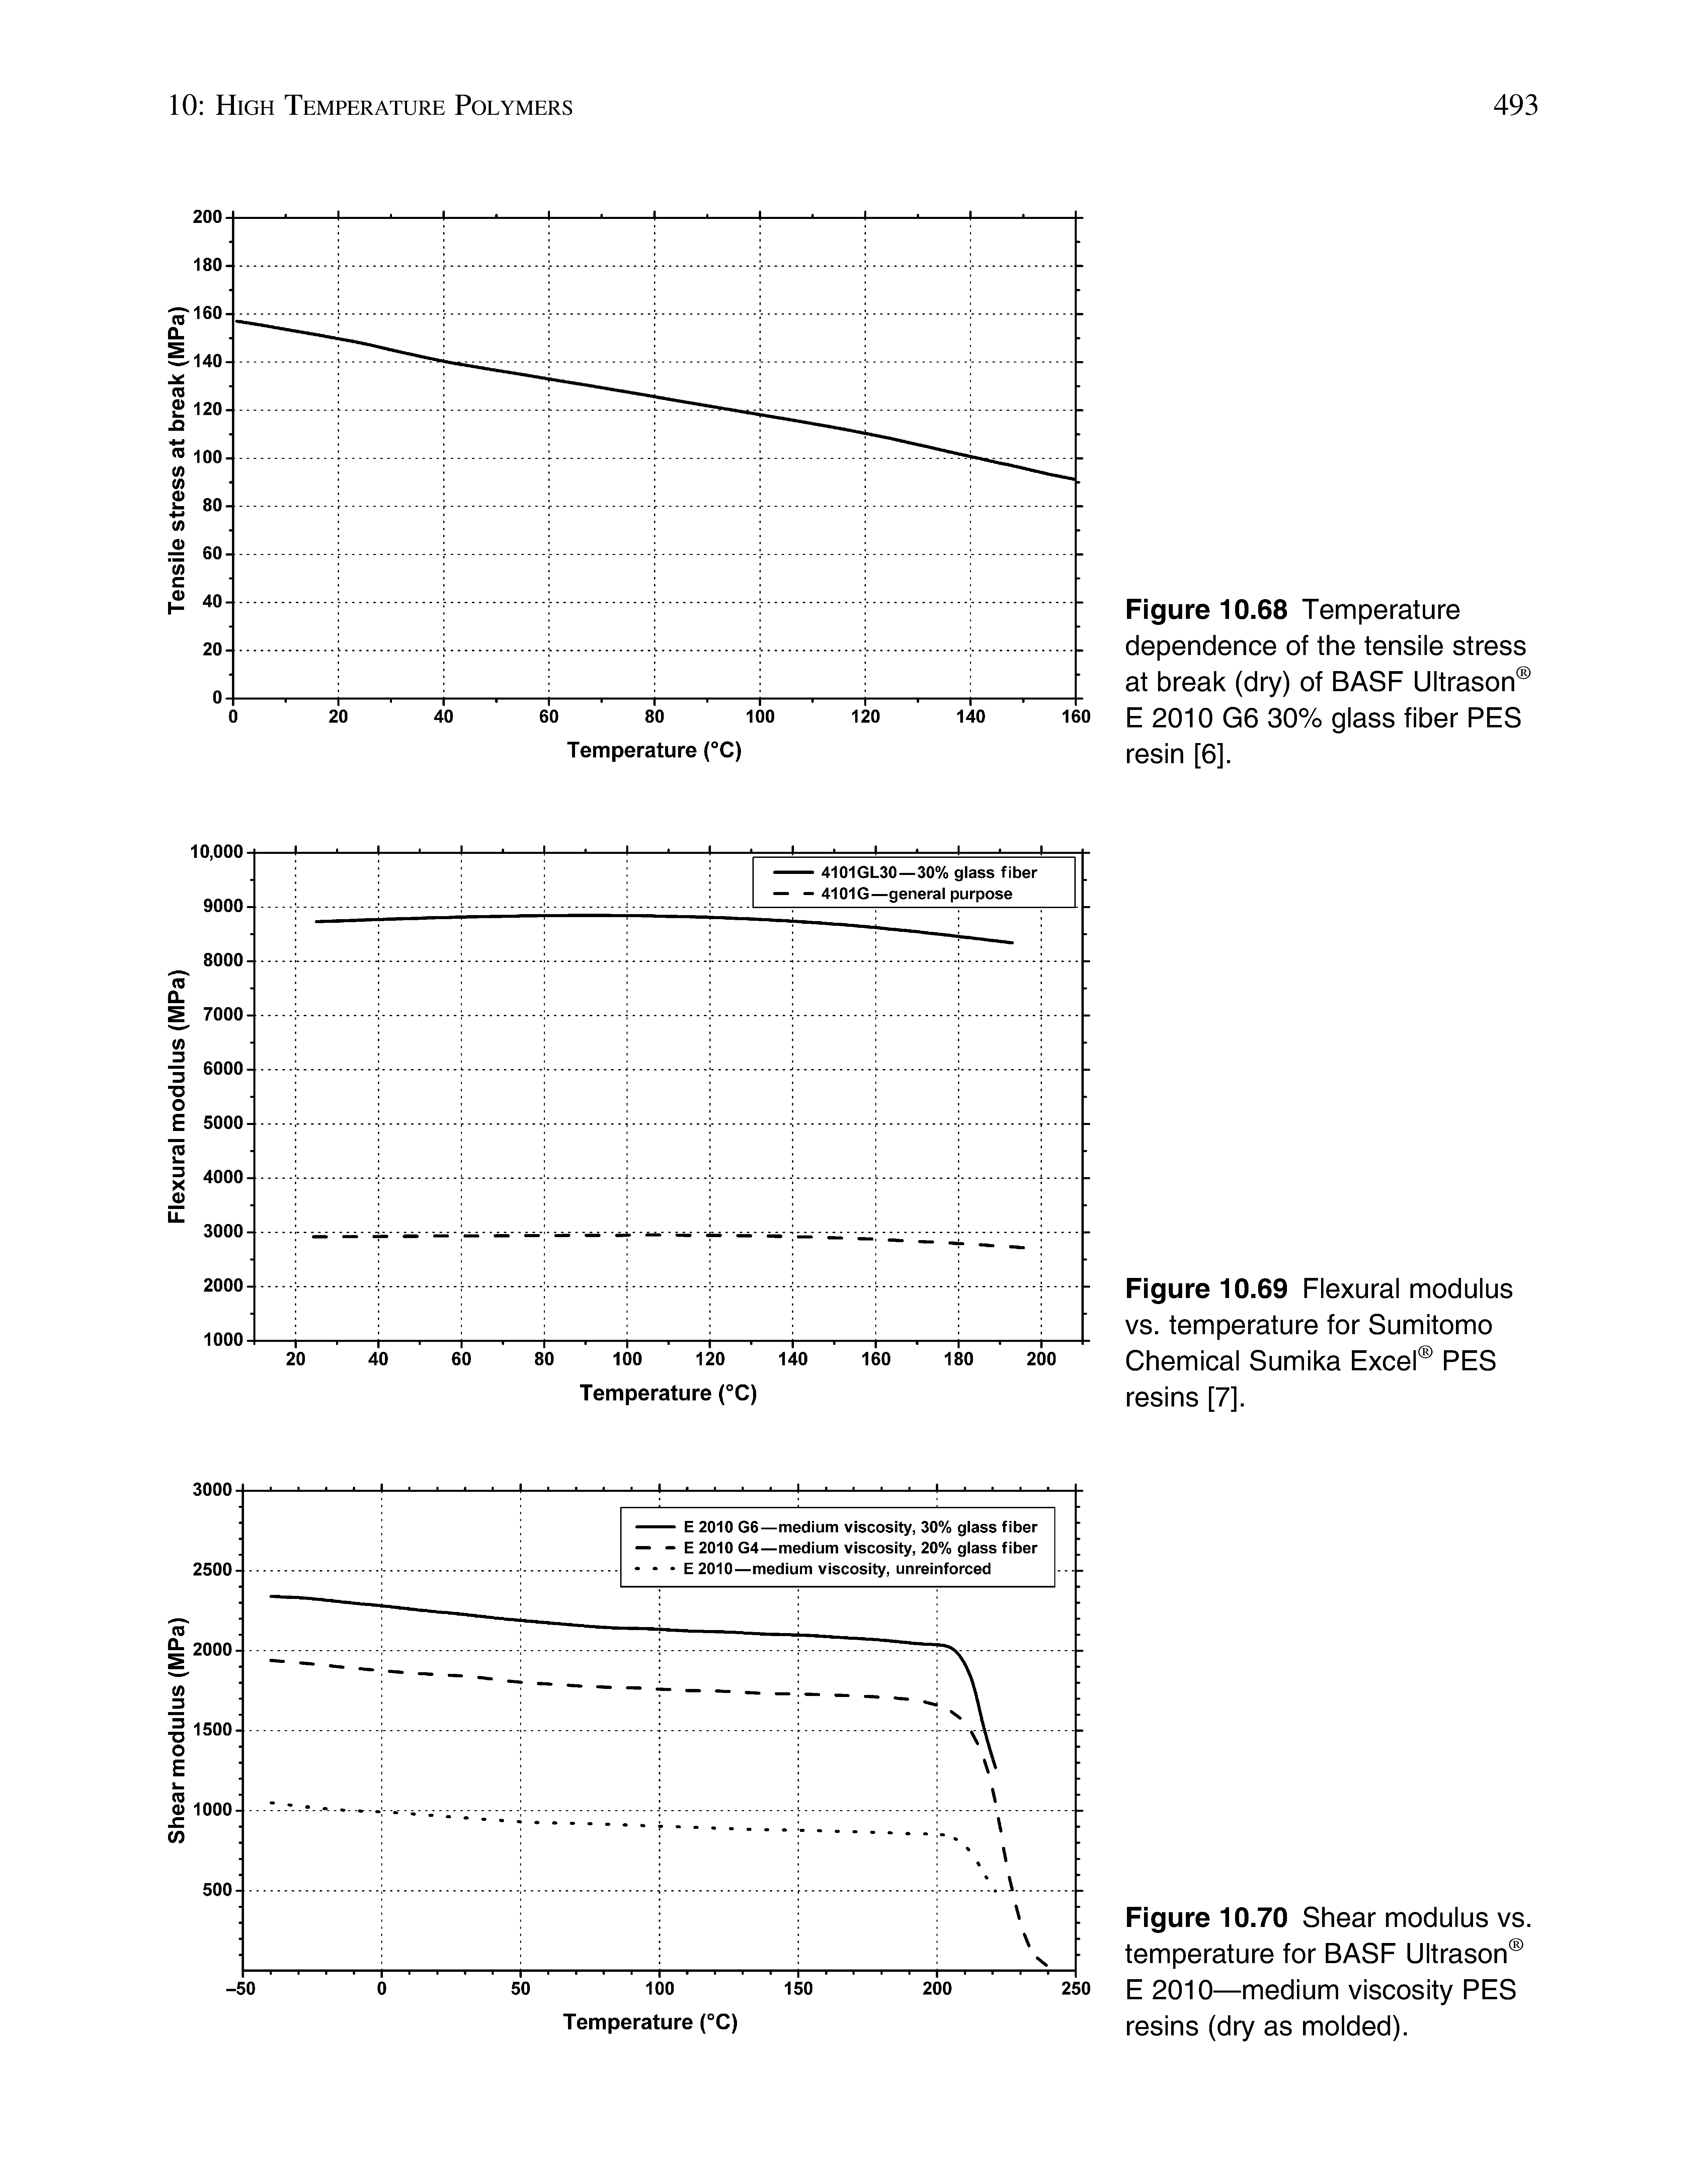 Figure 10.69 Flexural modulus vs. temperature for Sumitomo Chemical Sumika Excel PES resins [7].